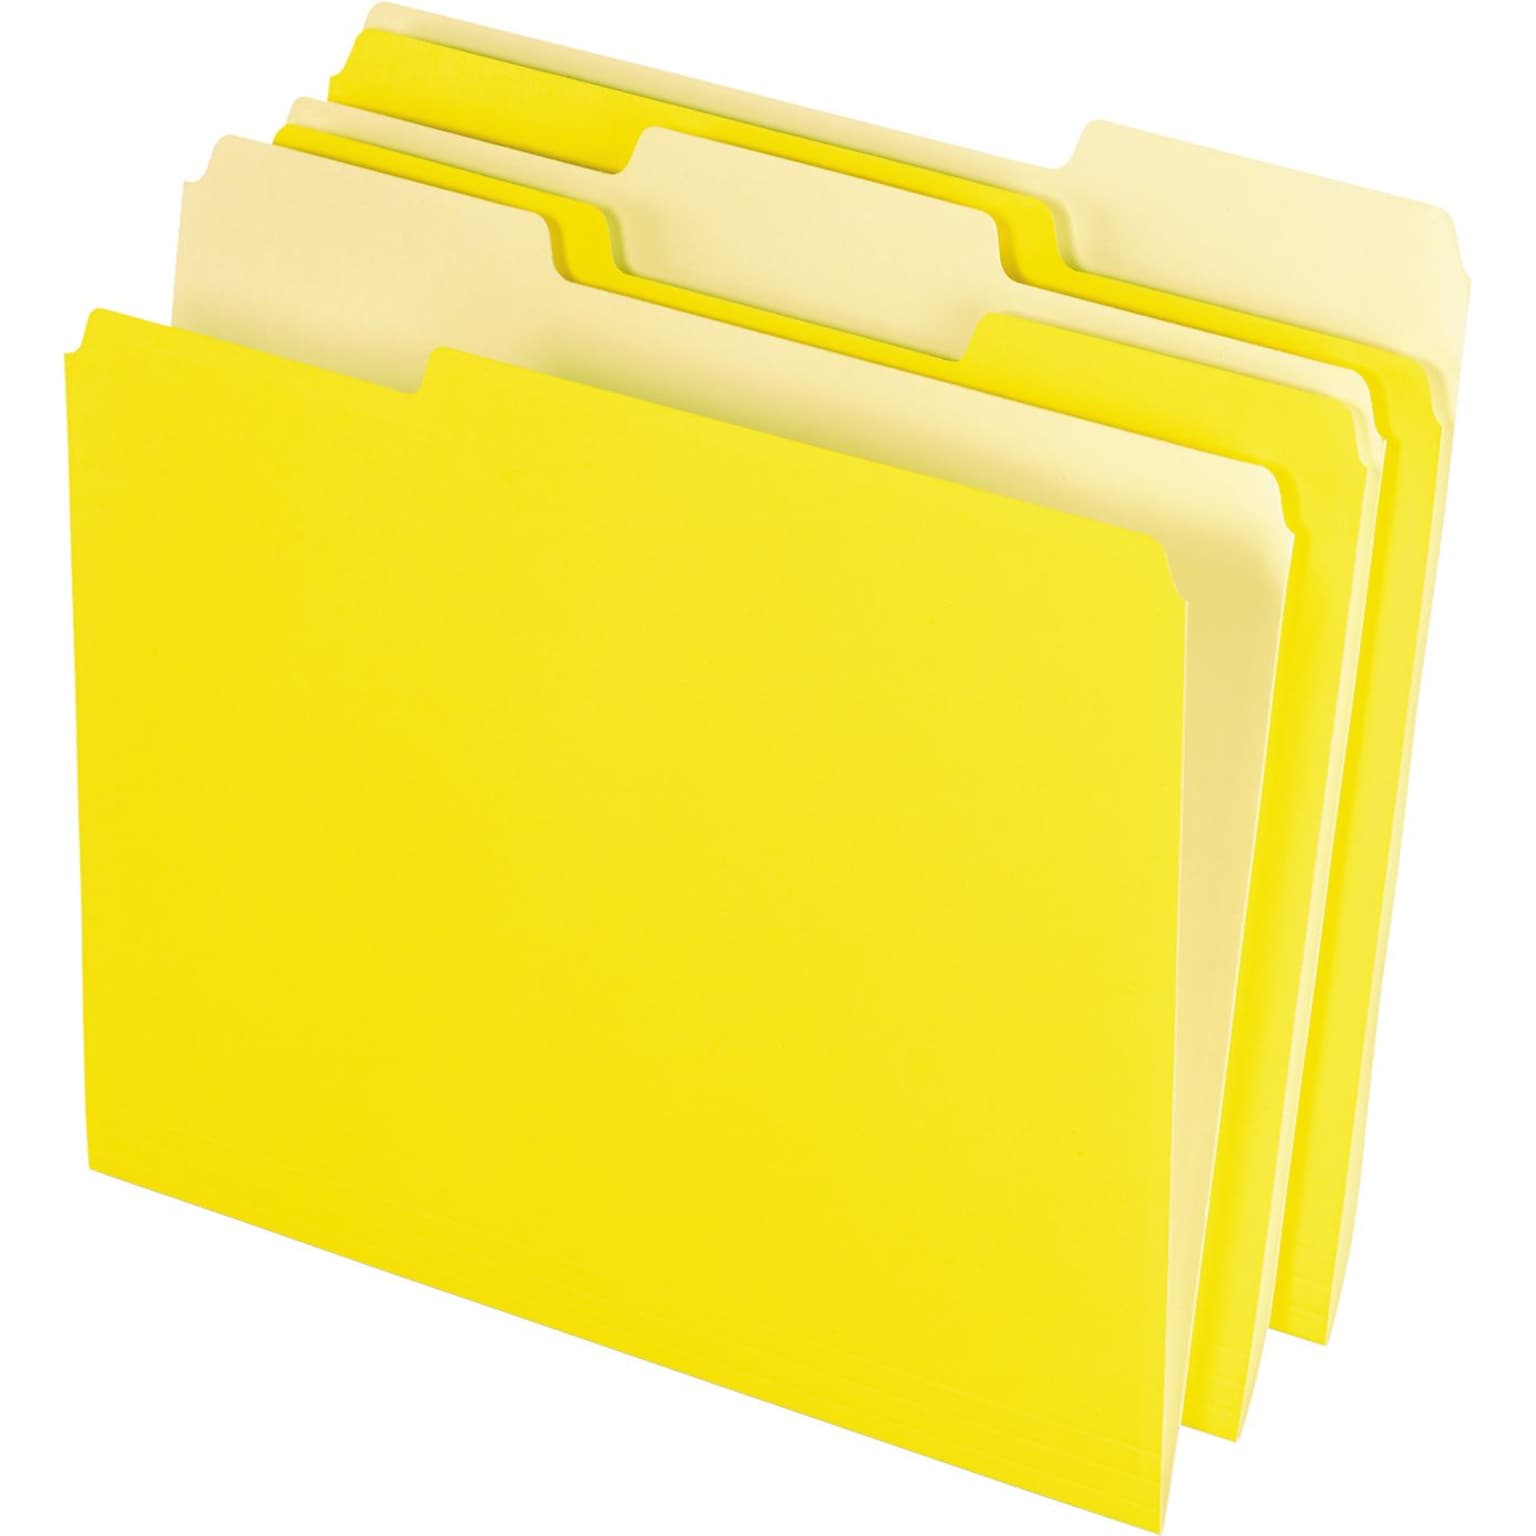 Pendaflex Two-Tone File Folder, 3 Tab, Letter Size, Yellow, 100/Box (PFX 152 1/3 YEL)